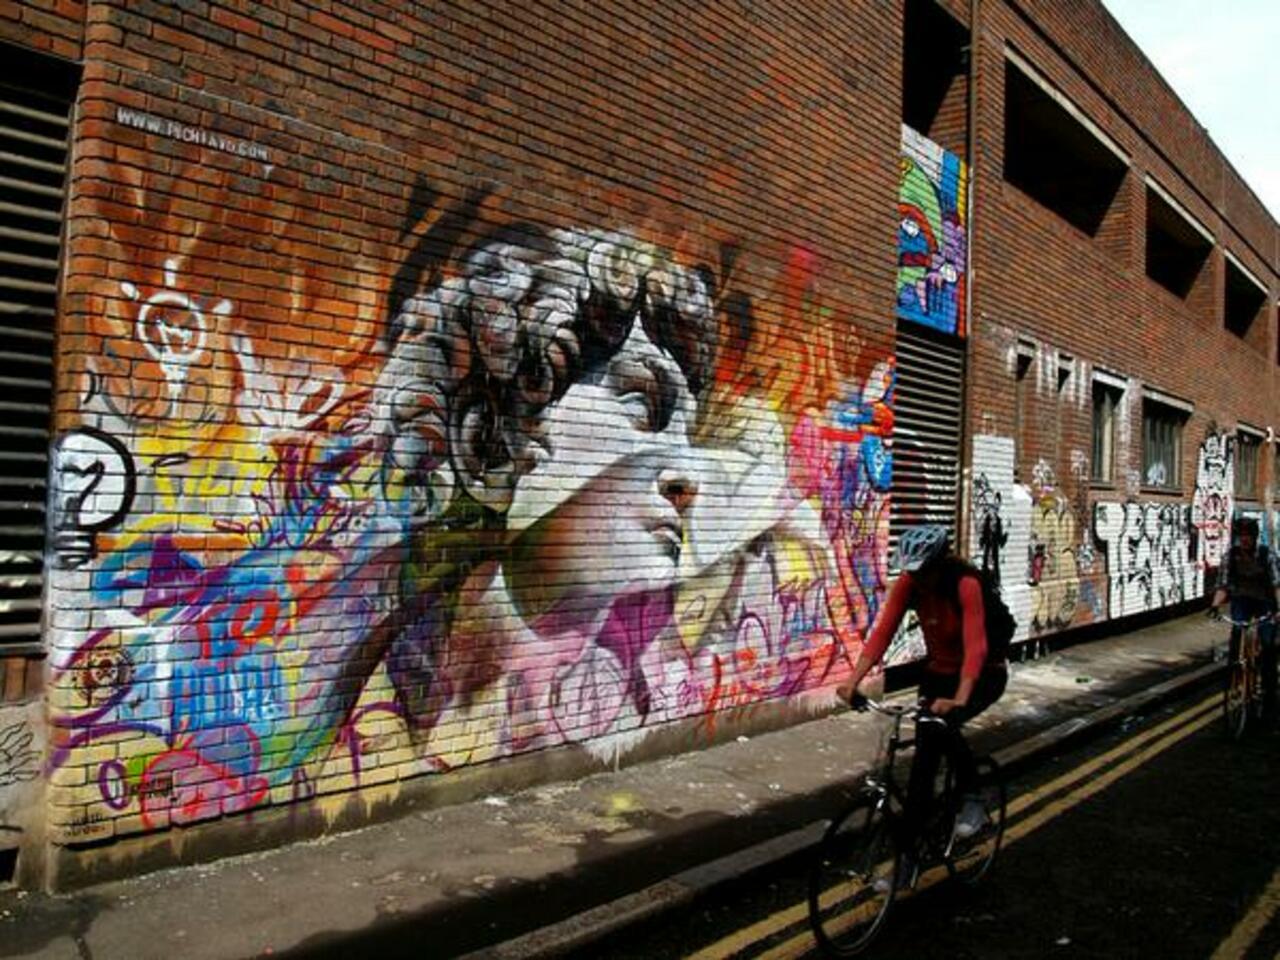 Artista: PichiAvo 
Londres, Reino Unido. 
#art #streetart #mural #graffiti http://t.co/wBJCFP7OVz